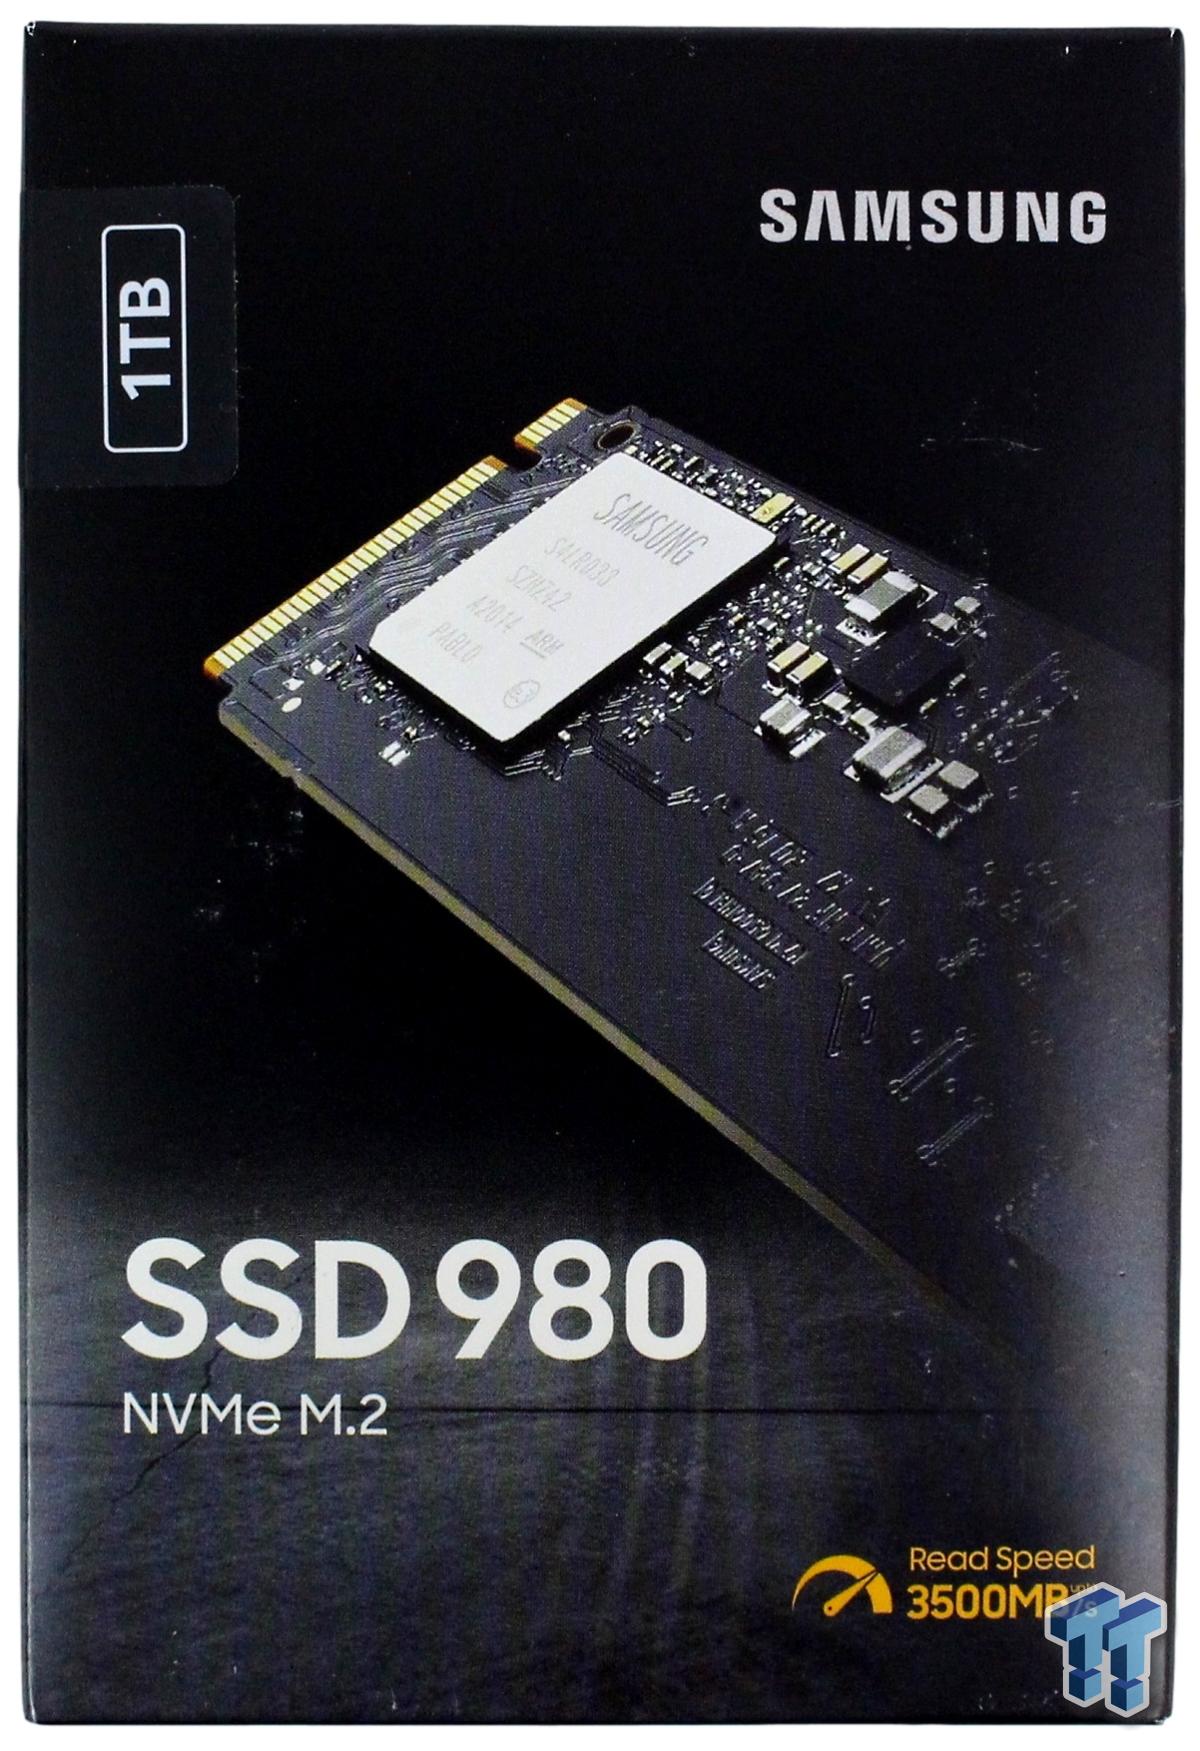 Samsung SSD 980 1TB NVMe SSD Review - Legit Reviews